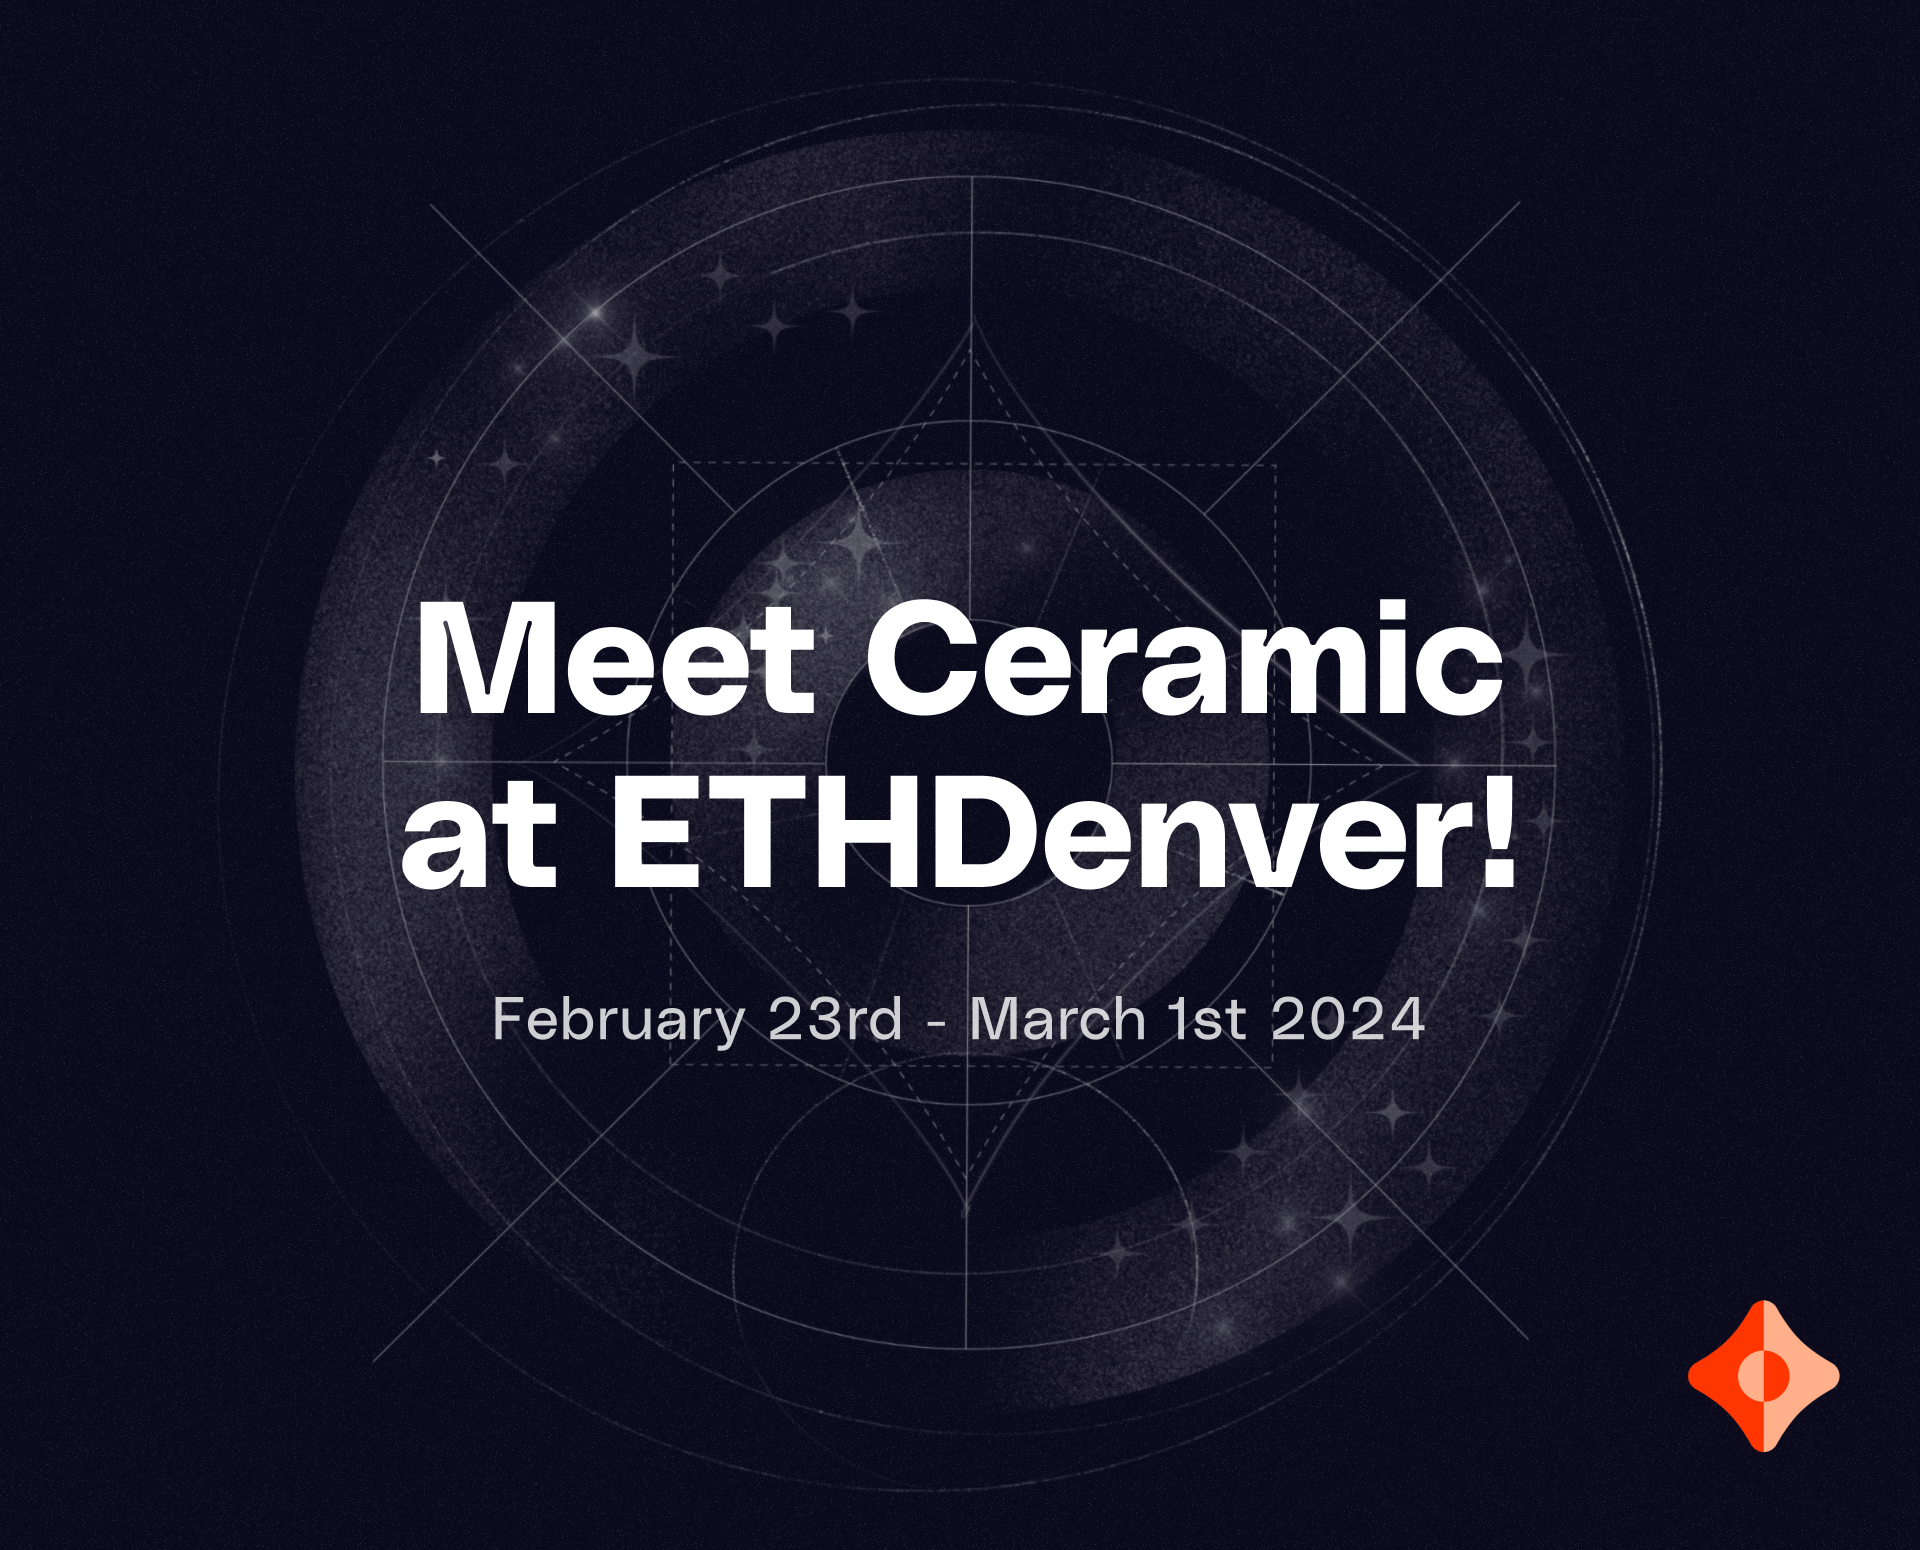 ETHDenver 2024: Where to find Ceramic in Denver